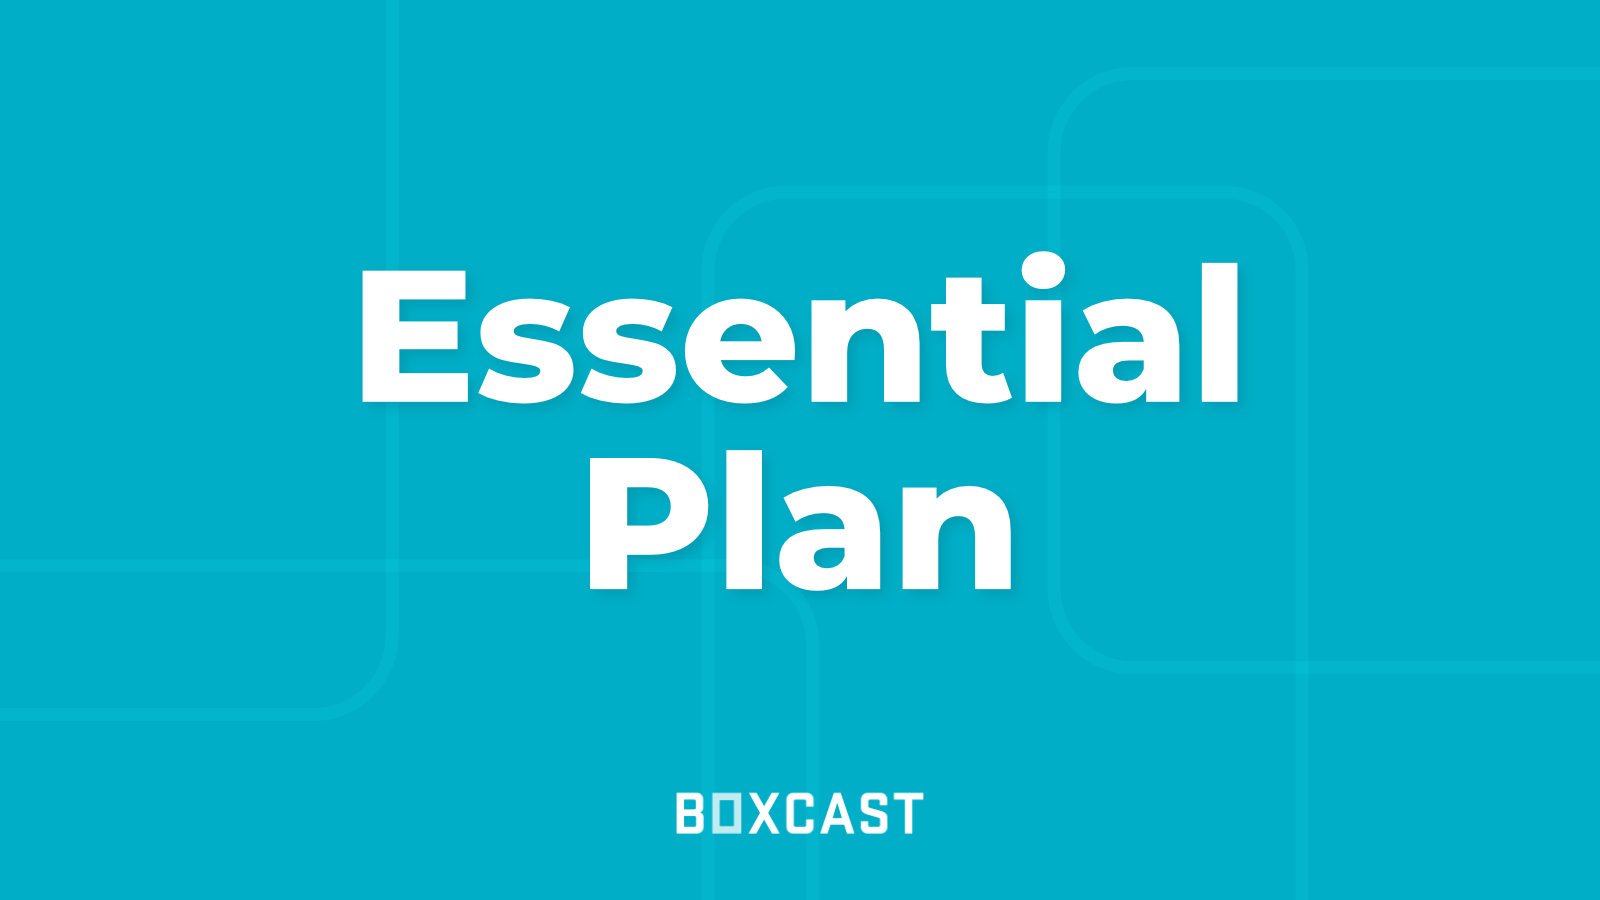 Essential Plan BoxCast